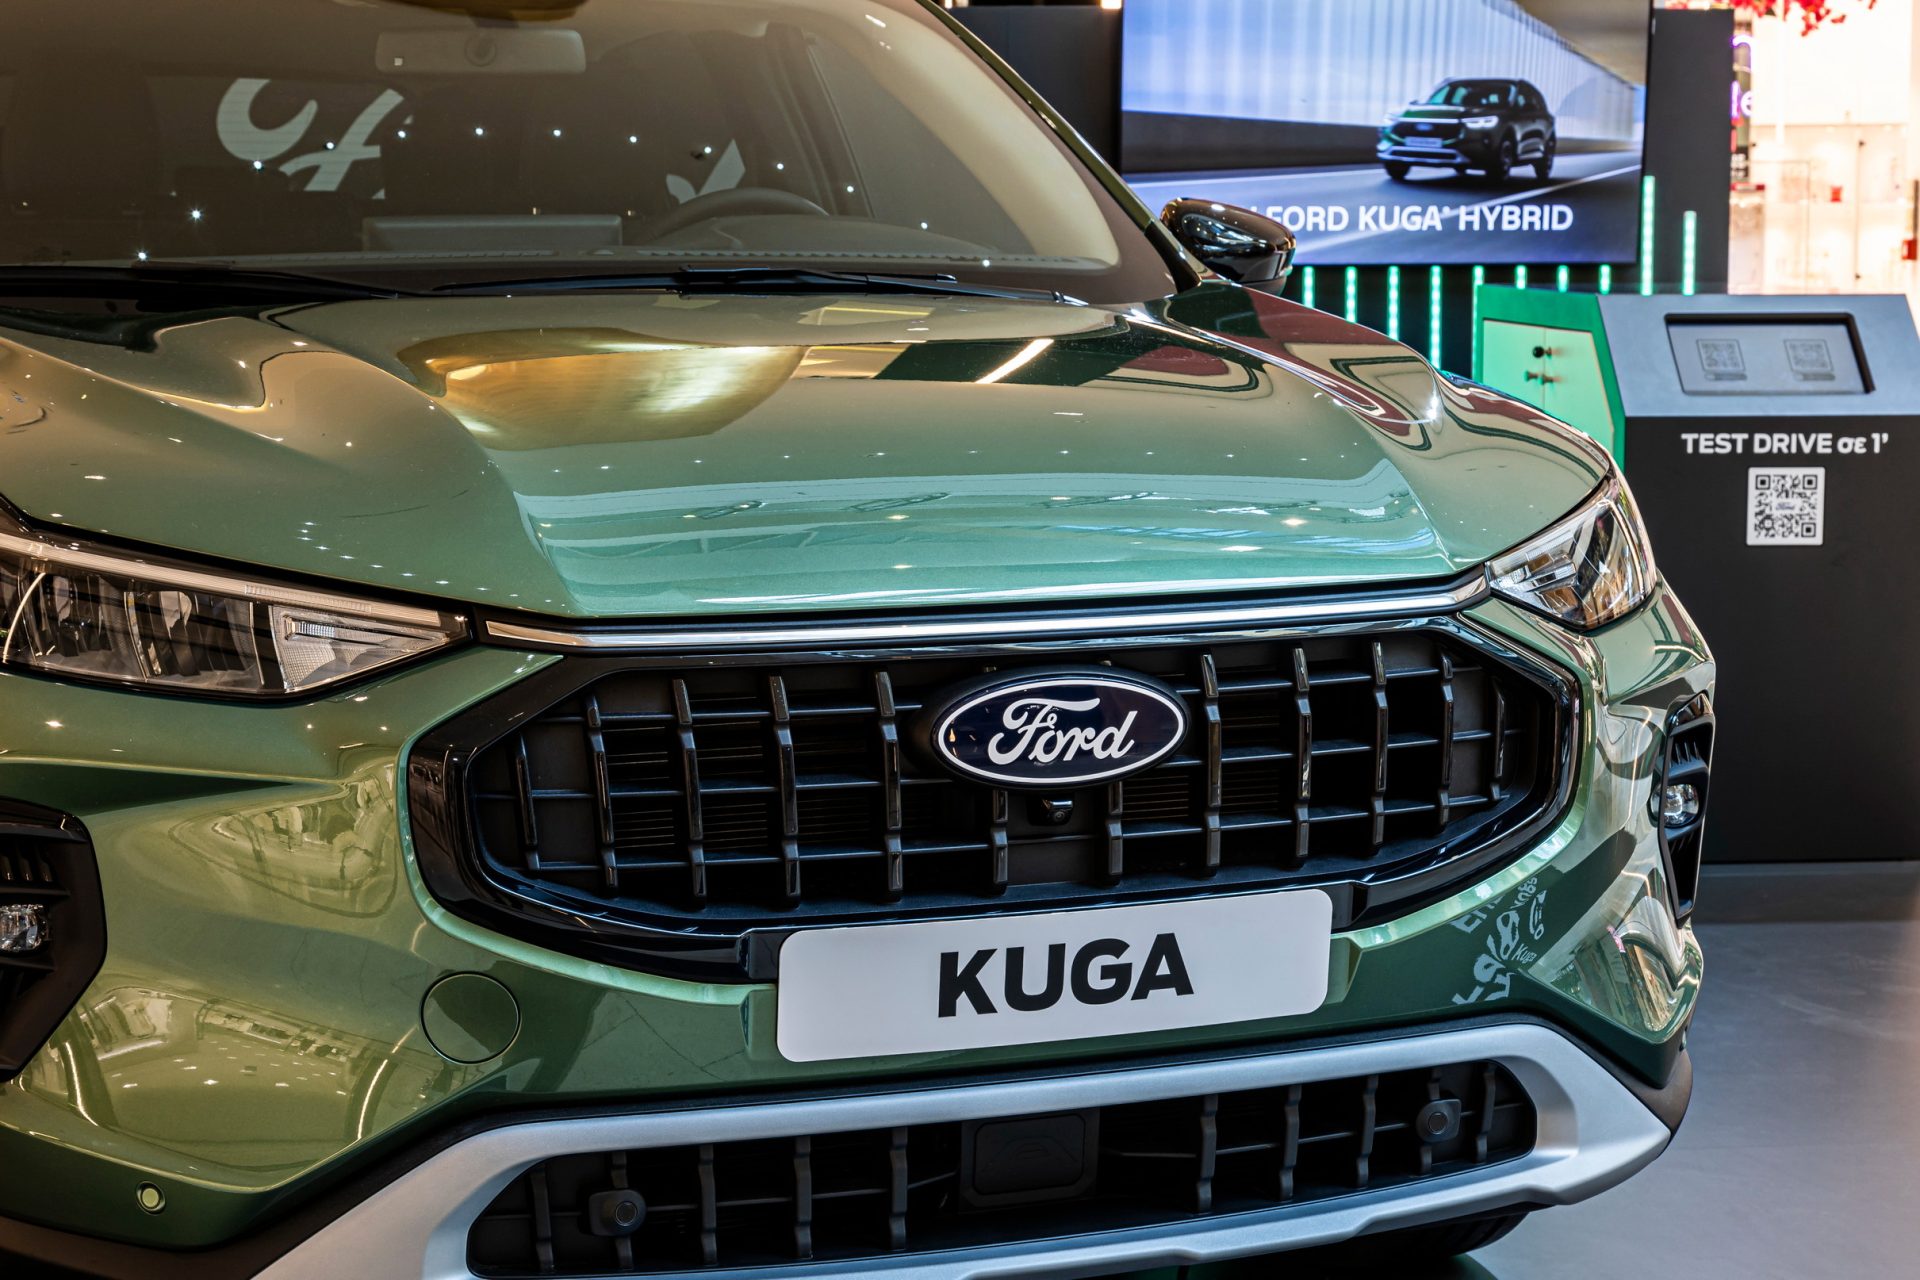 FORD KUGA 04 Δείτε το νέο Ford Kuga στο πολυτελές stage της Ford στο Golden Hall και κλείστε ένα Test Drive